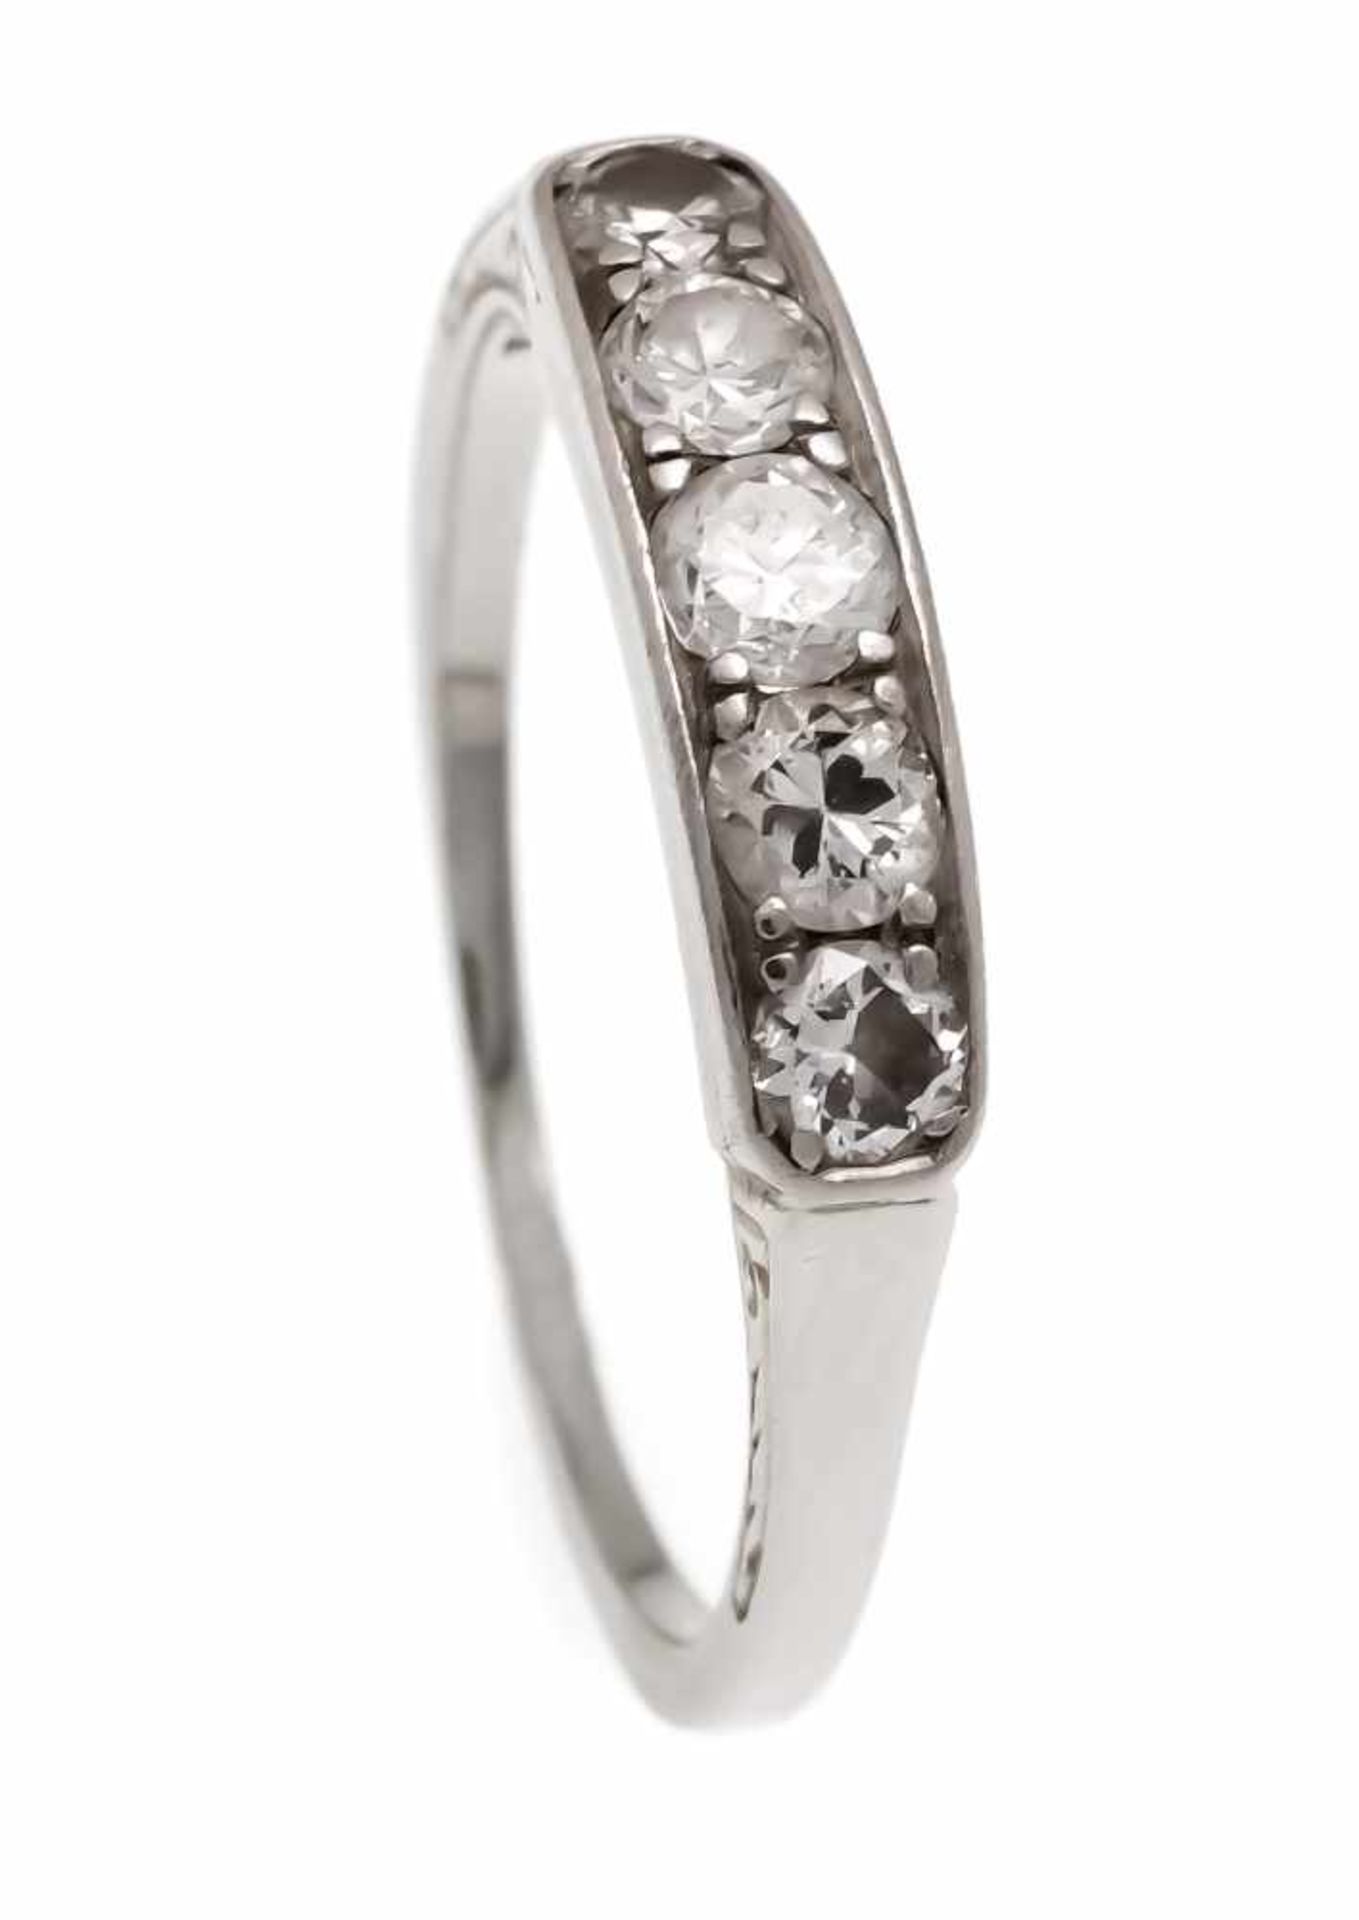 Old cut diamond ring WG 750/000 with 5 old cut diamonds, total 0.50 ct TW-W / SI-PI1, RG55, 2.4